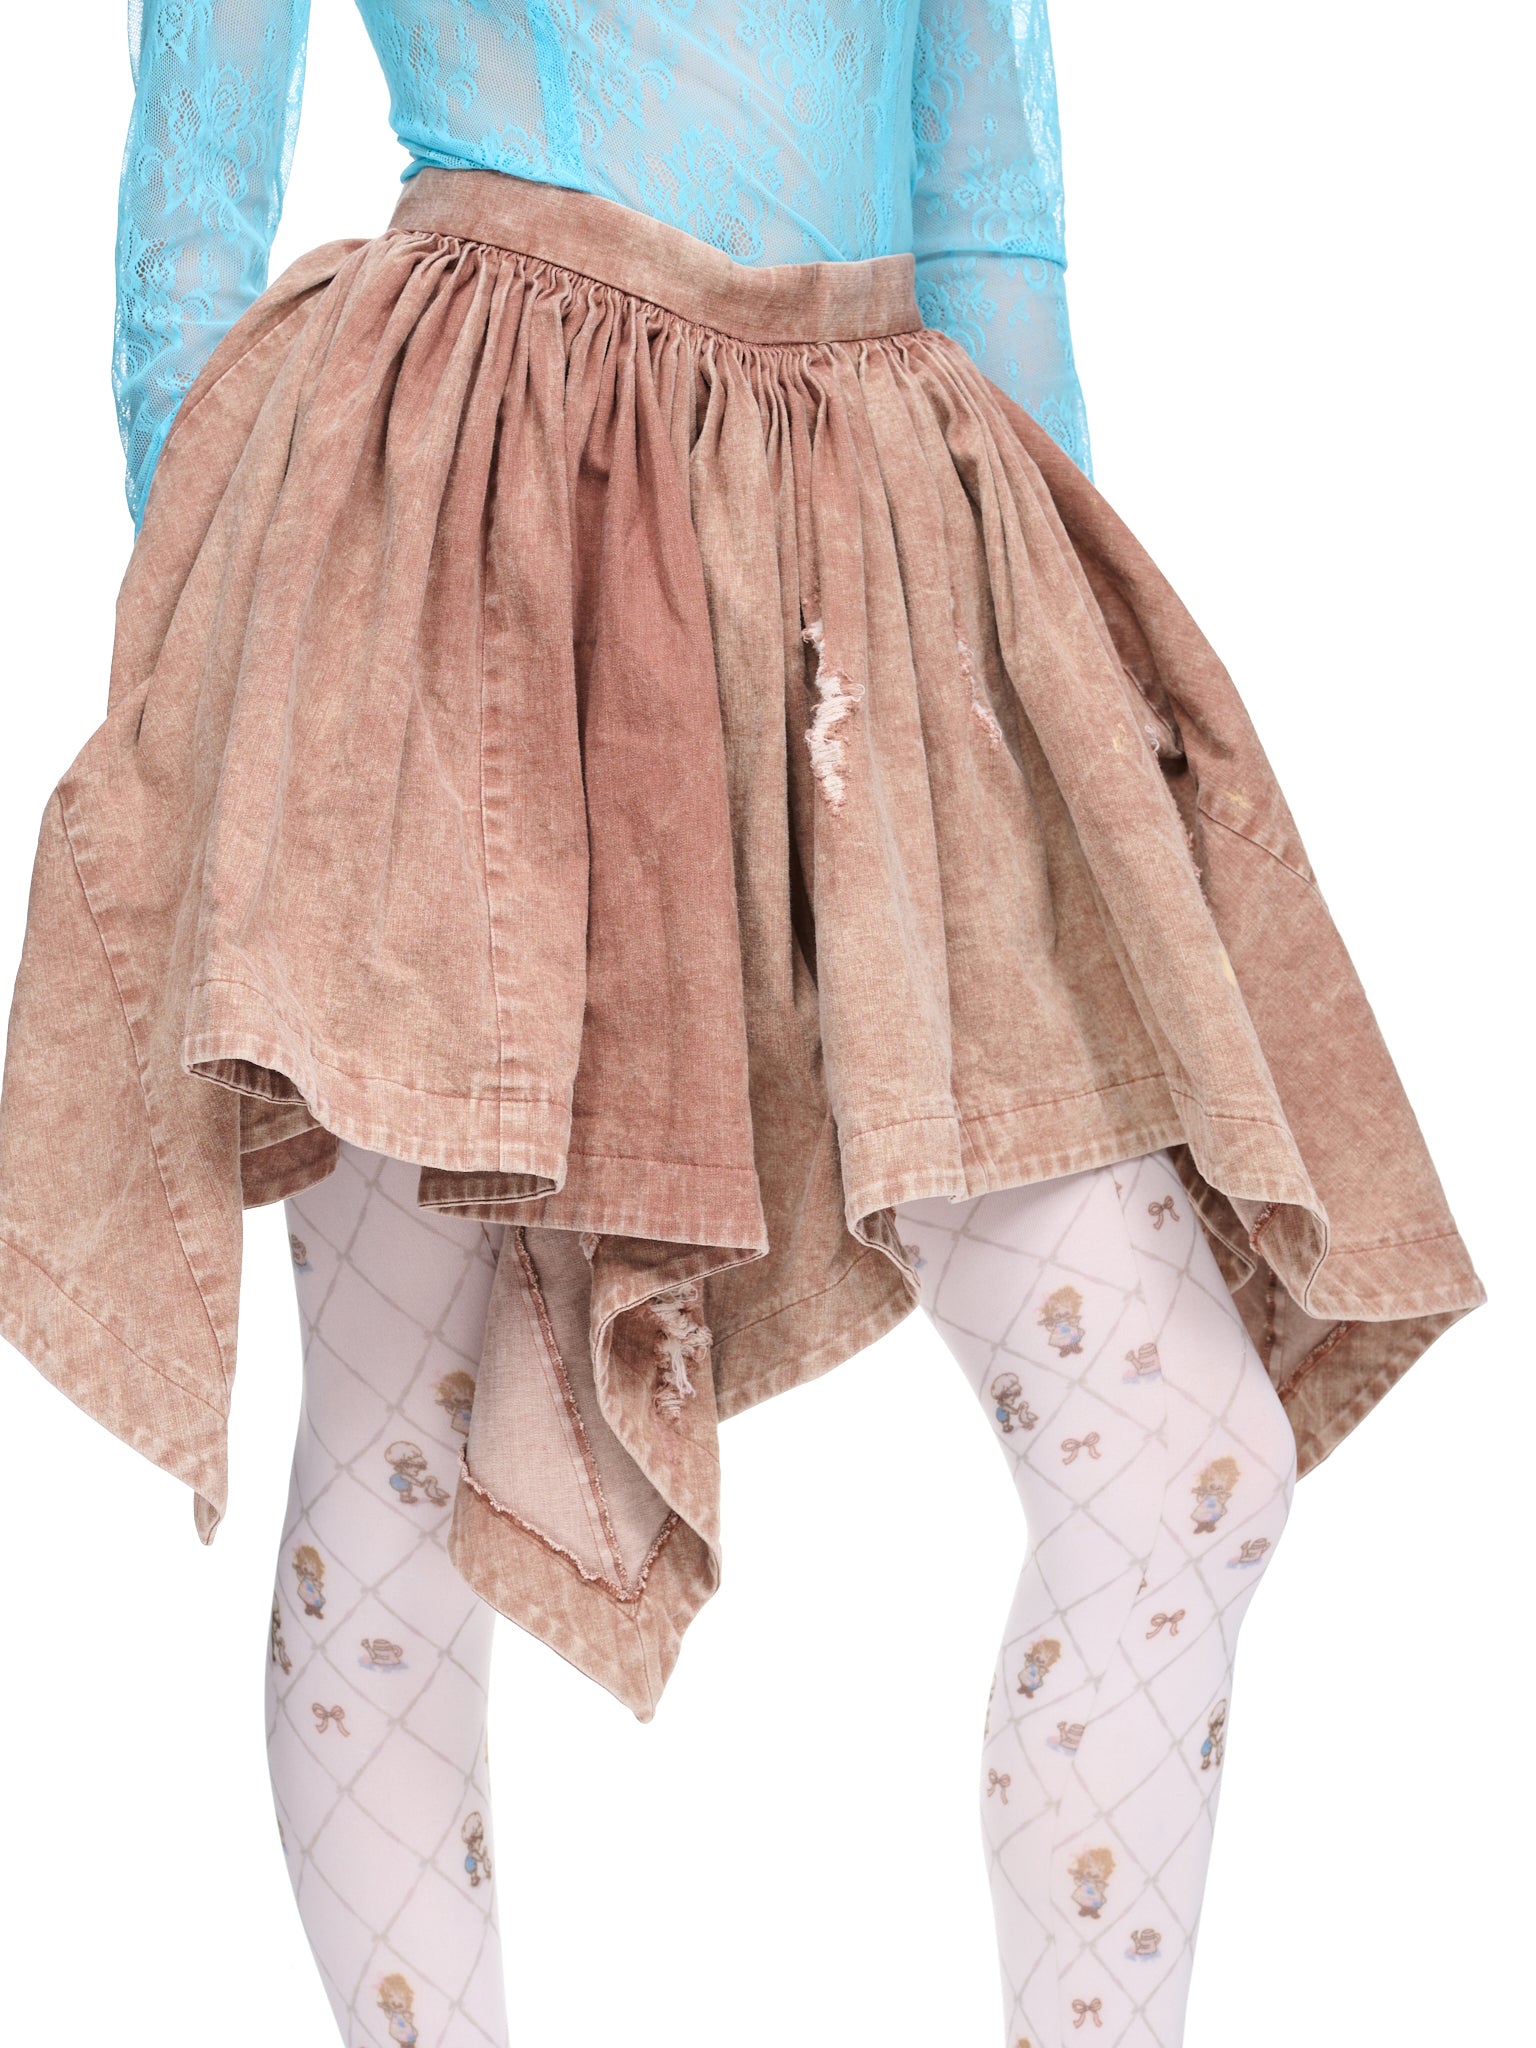 Nana's Knickers Skirt (D01-BROWN)